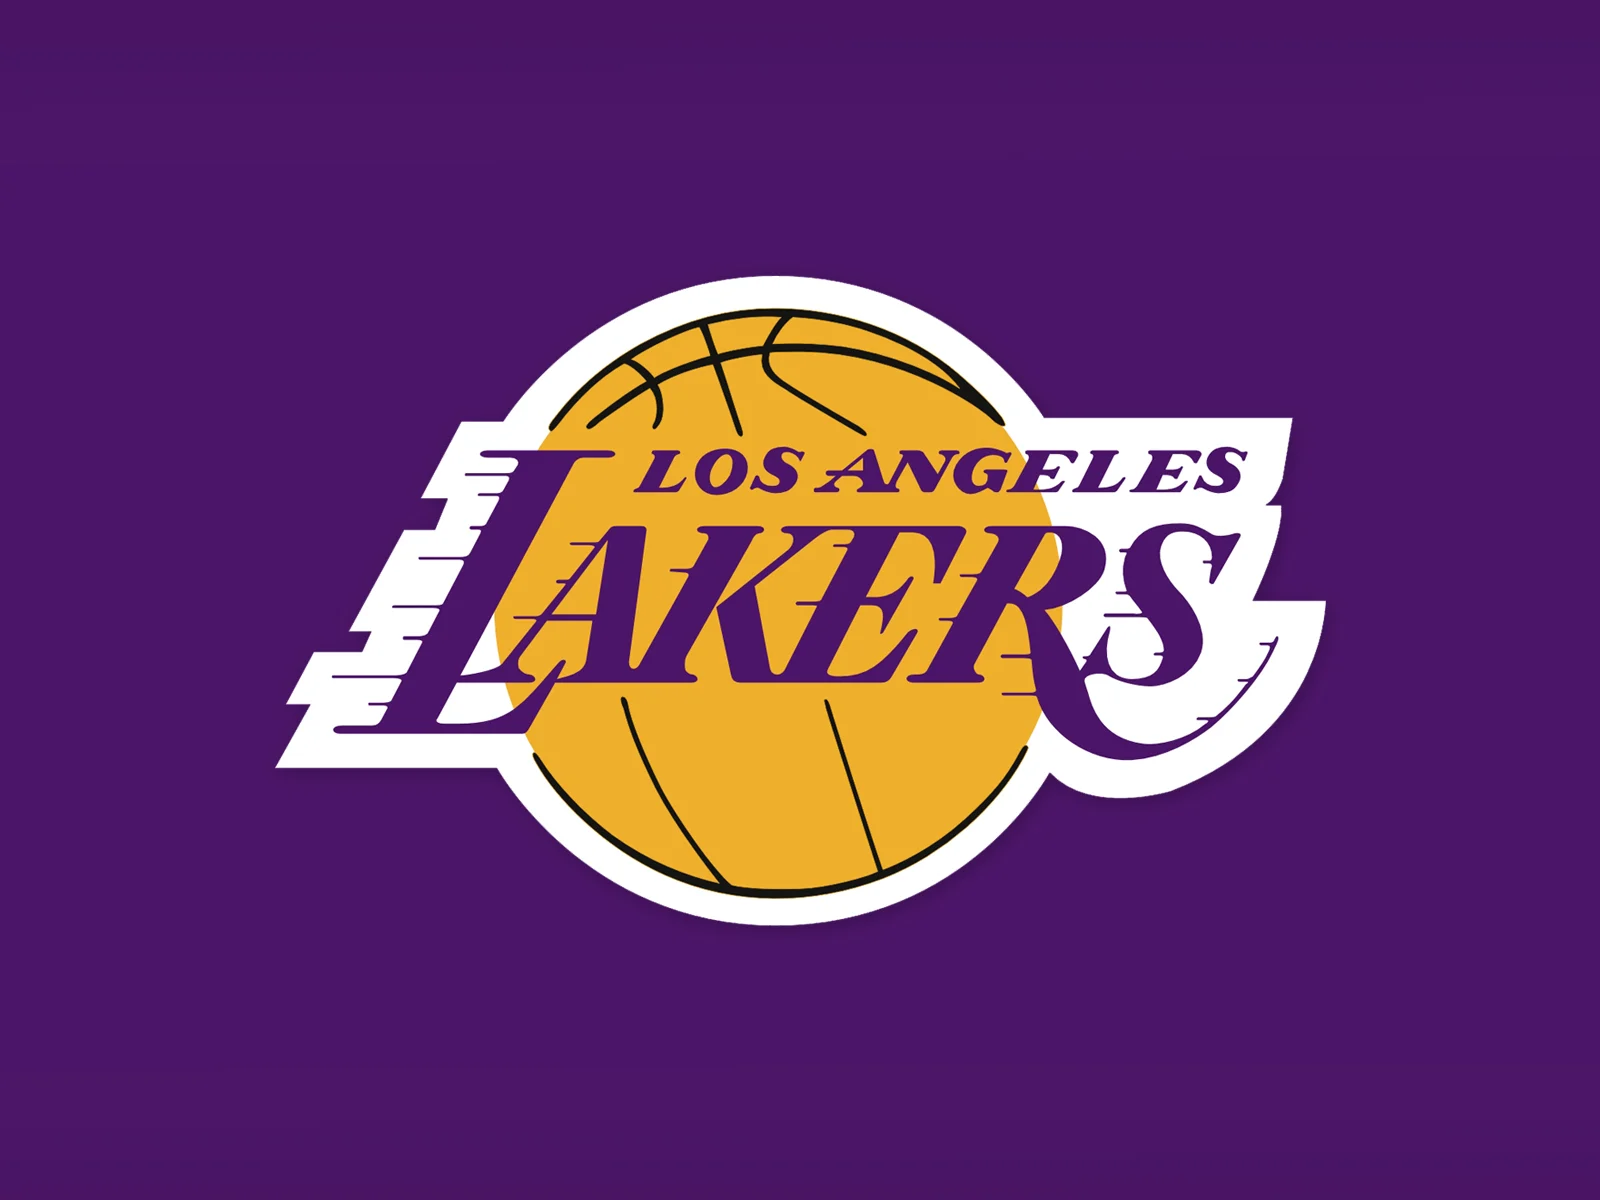 Lakers slog Pacers i offensivt utbrott